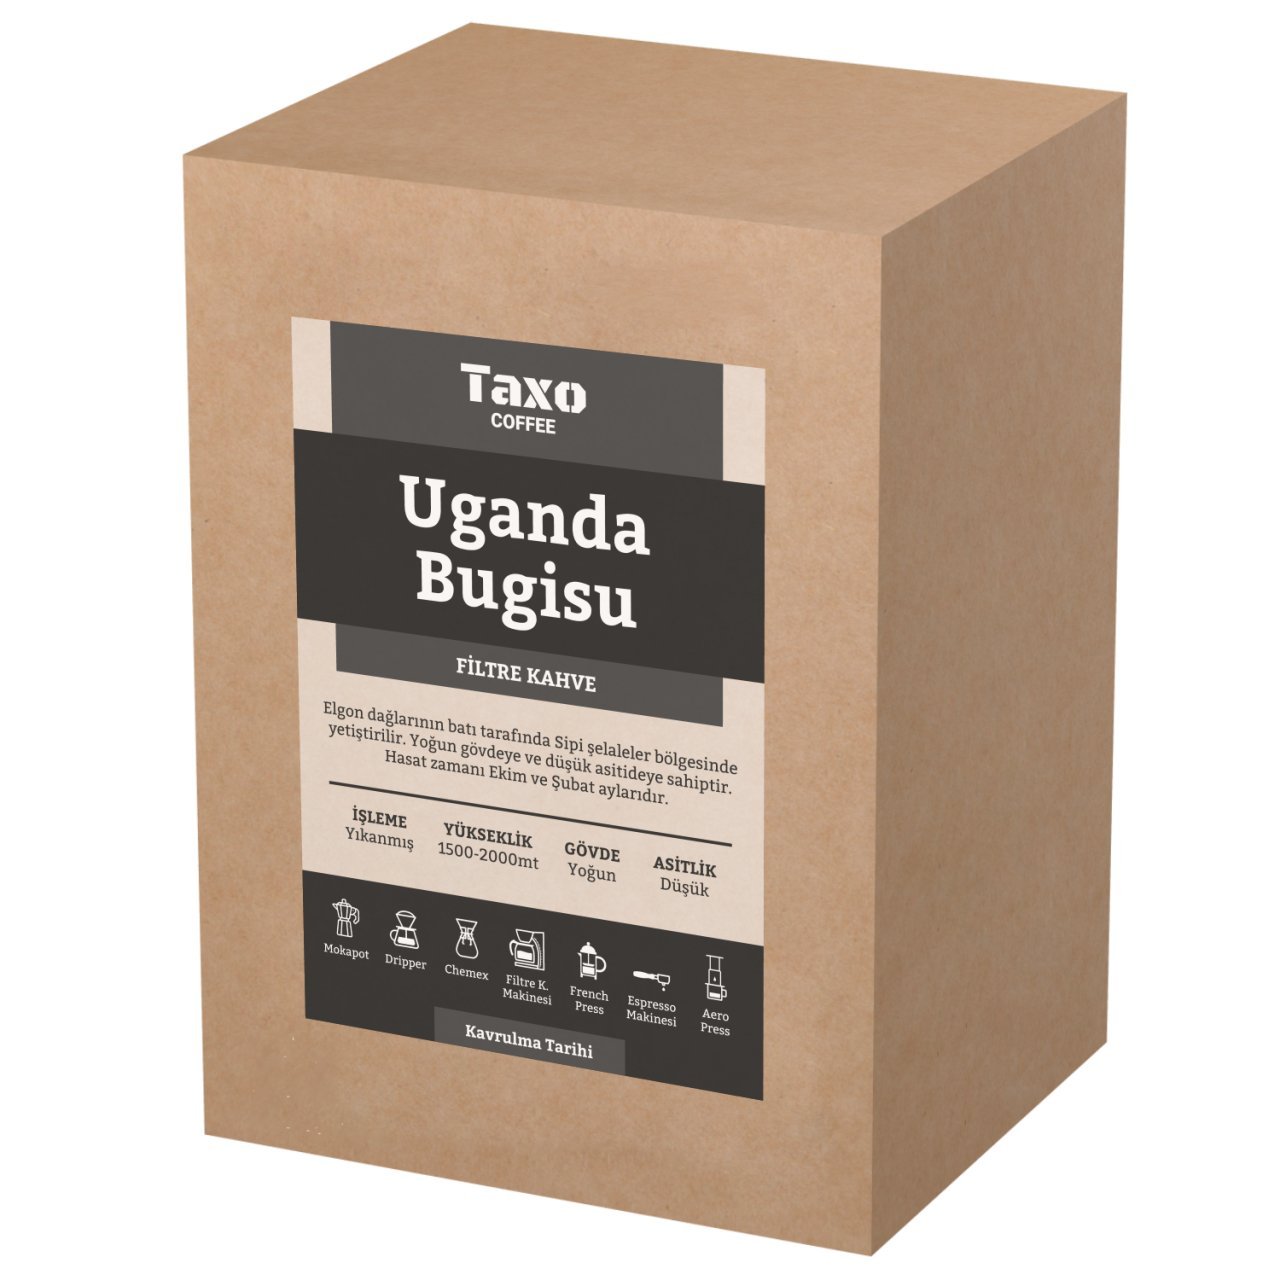 Uganda Bugisu 5kg Filtre Kahve